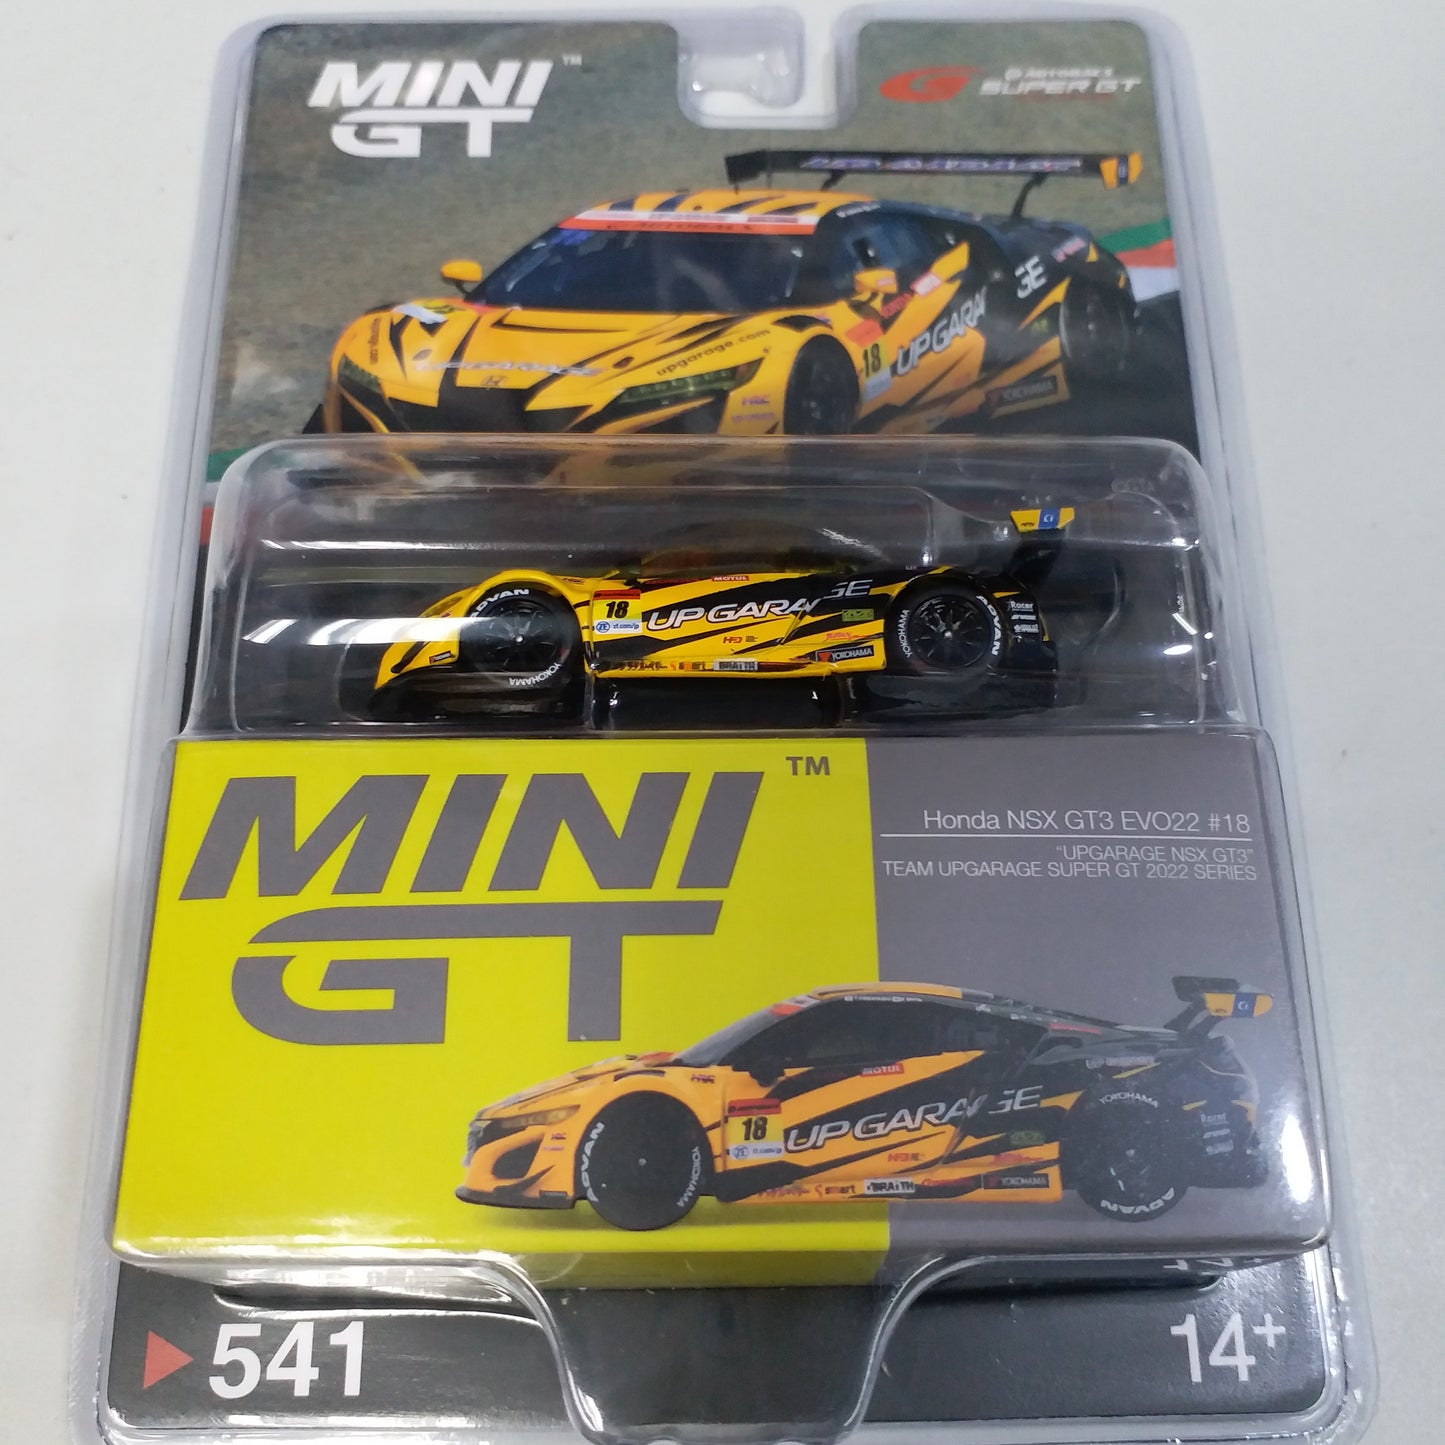 MINI GT #541 Honda NSX GT3 EVO22 #18 TEAM UPGARAGE 2022 Super GT Series